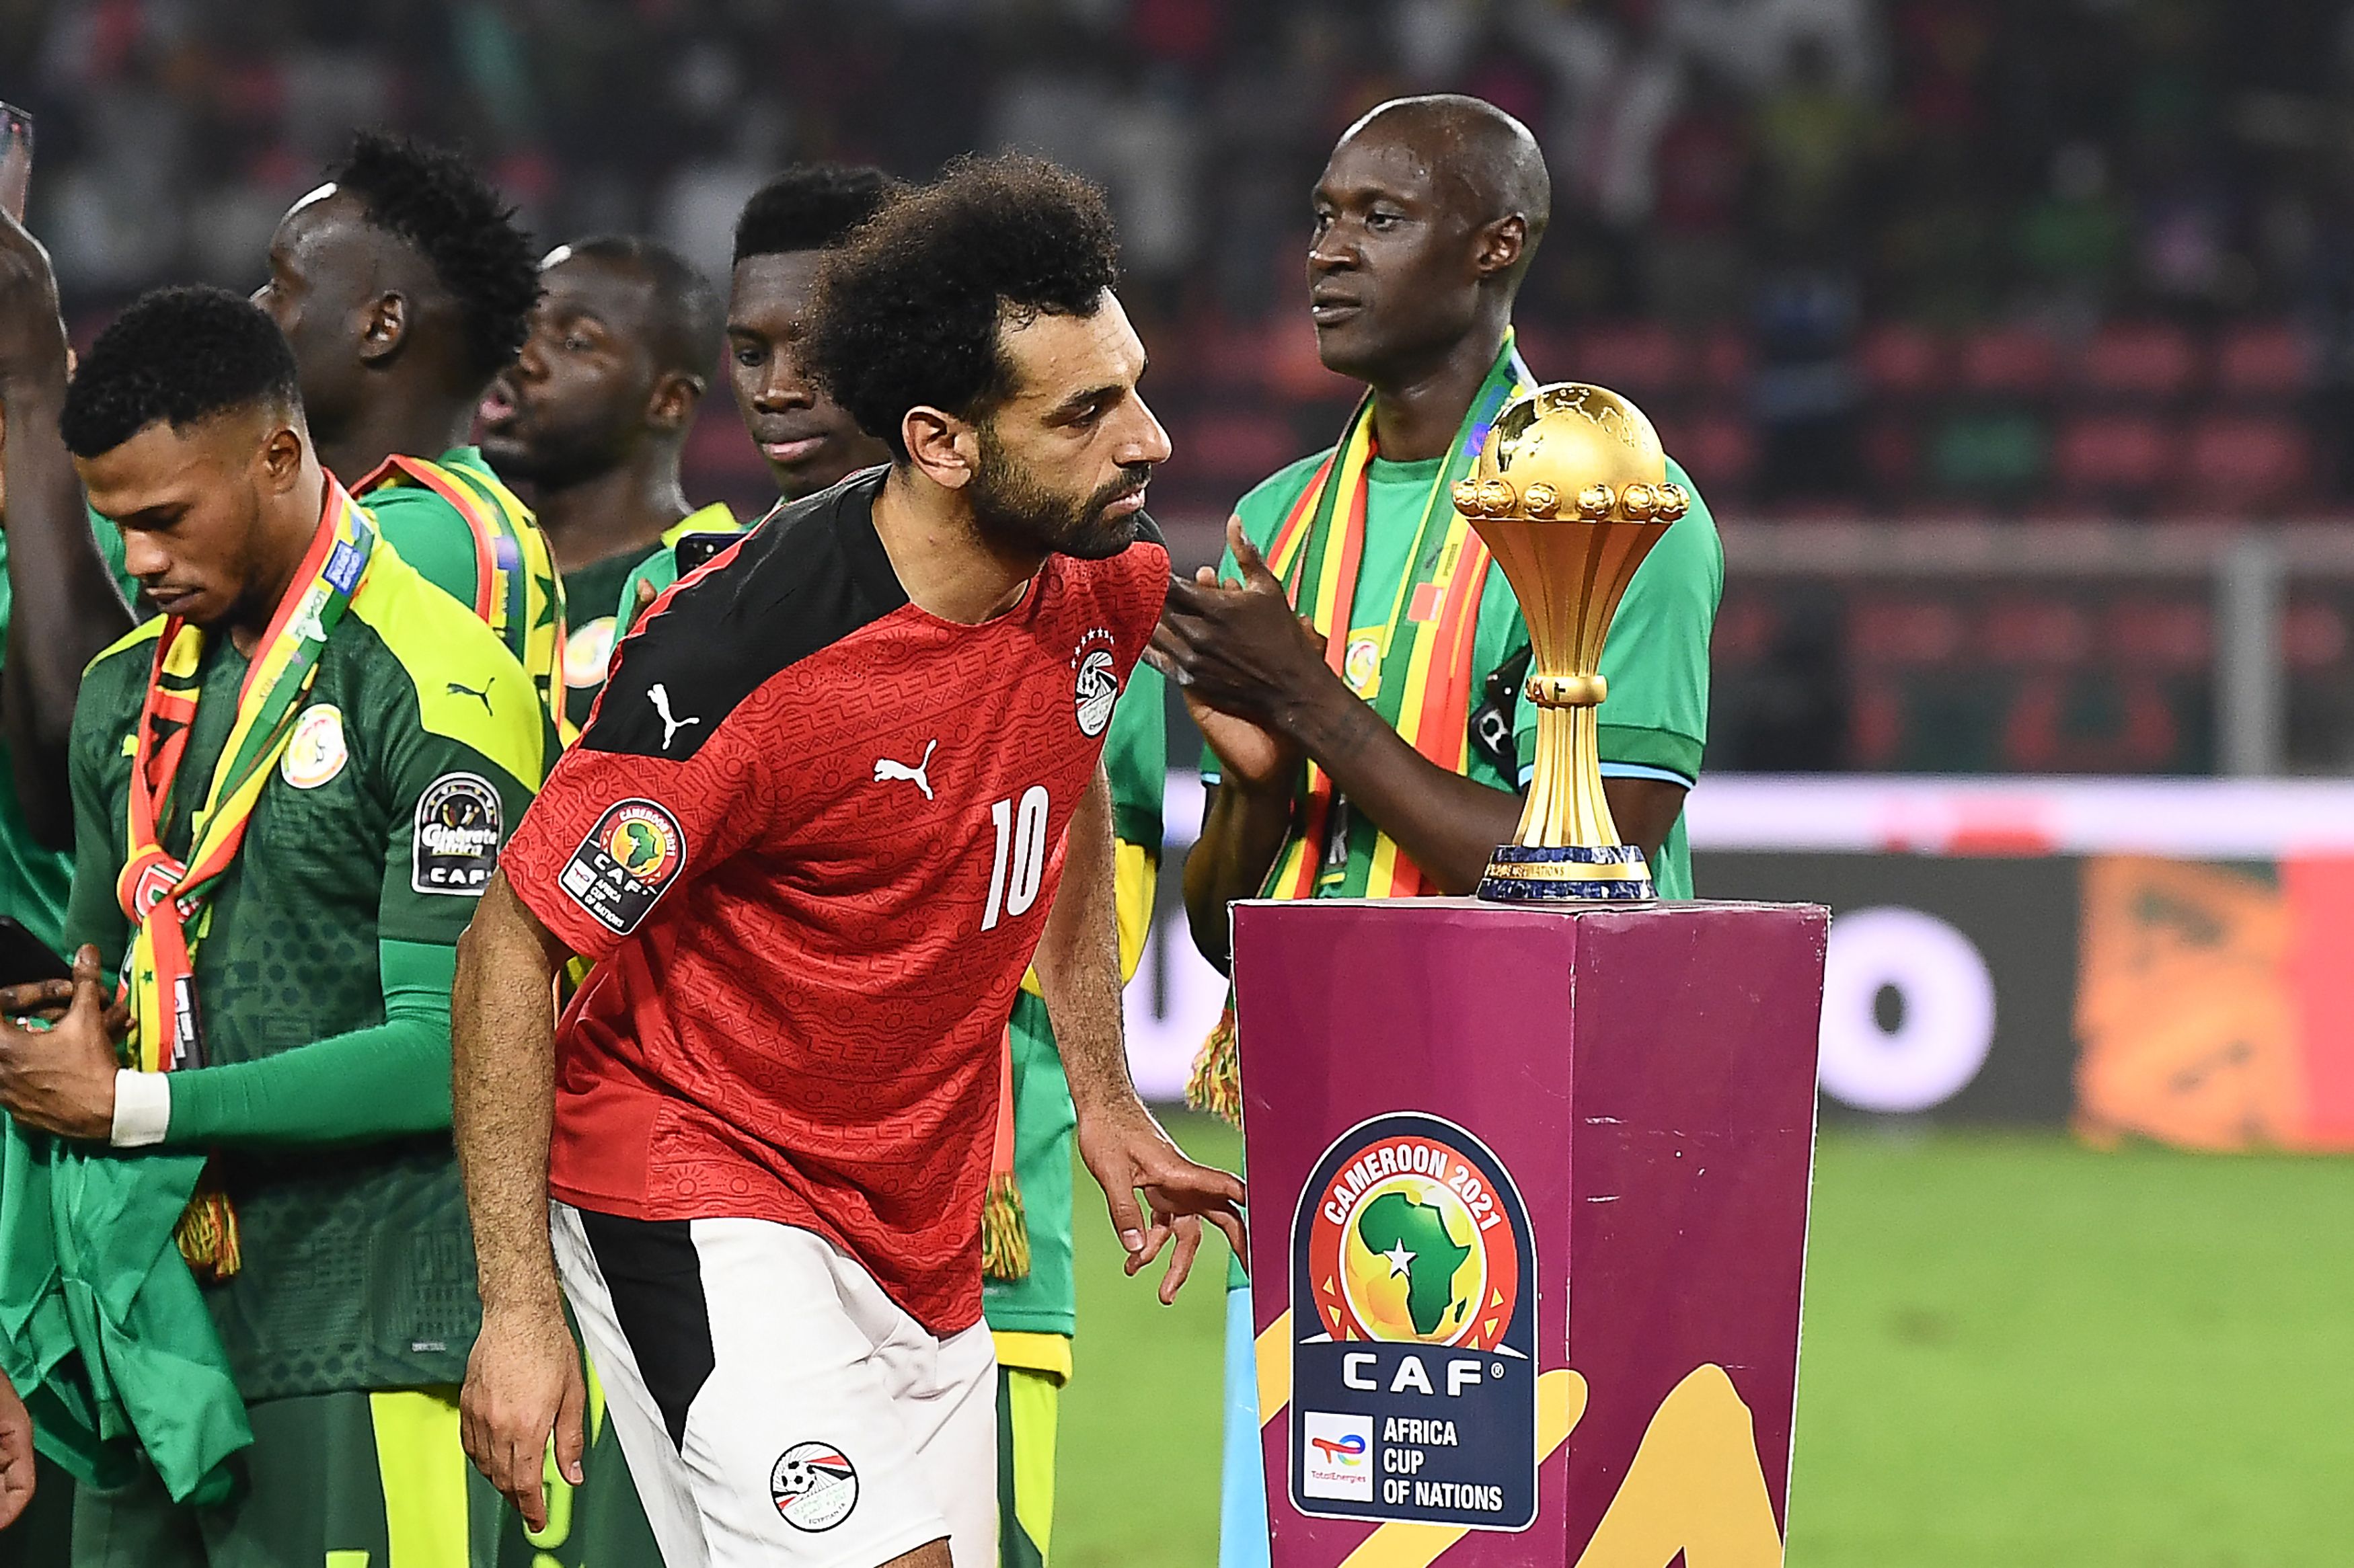 Salah walks past the trophy after Senegal’s triumph on penalties